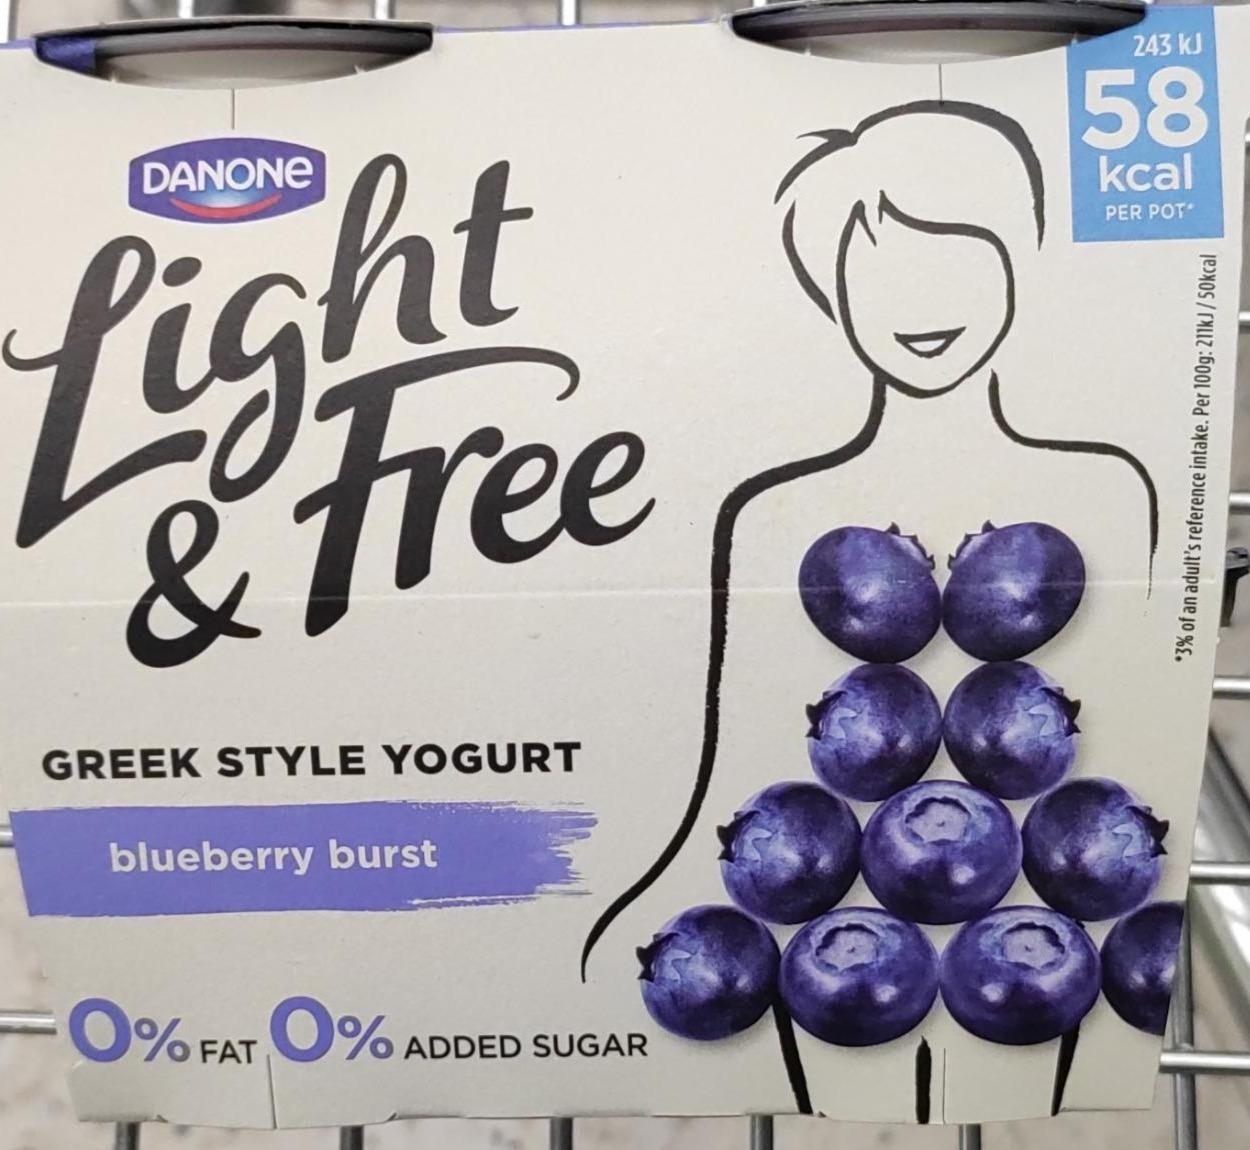 Képek - Light & Free Greek Style Yogurt Blueberry burst Danone